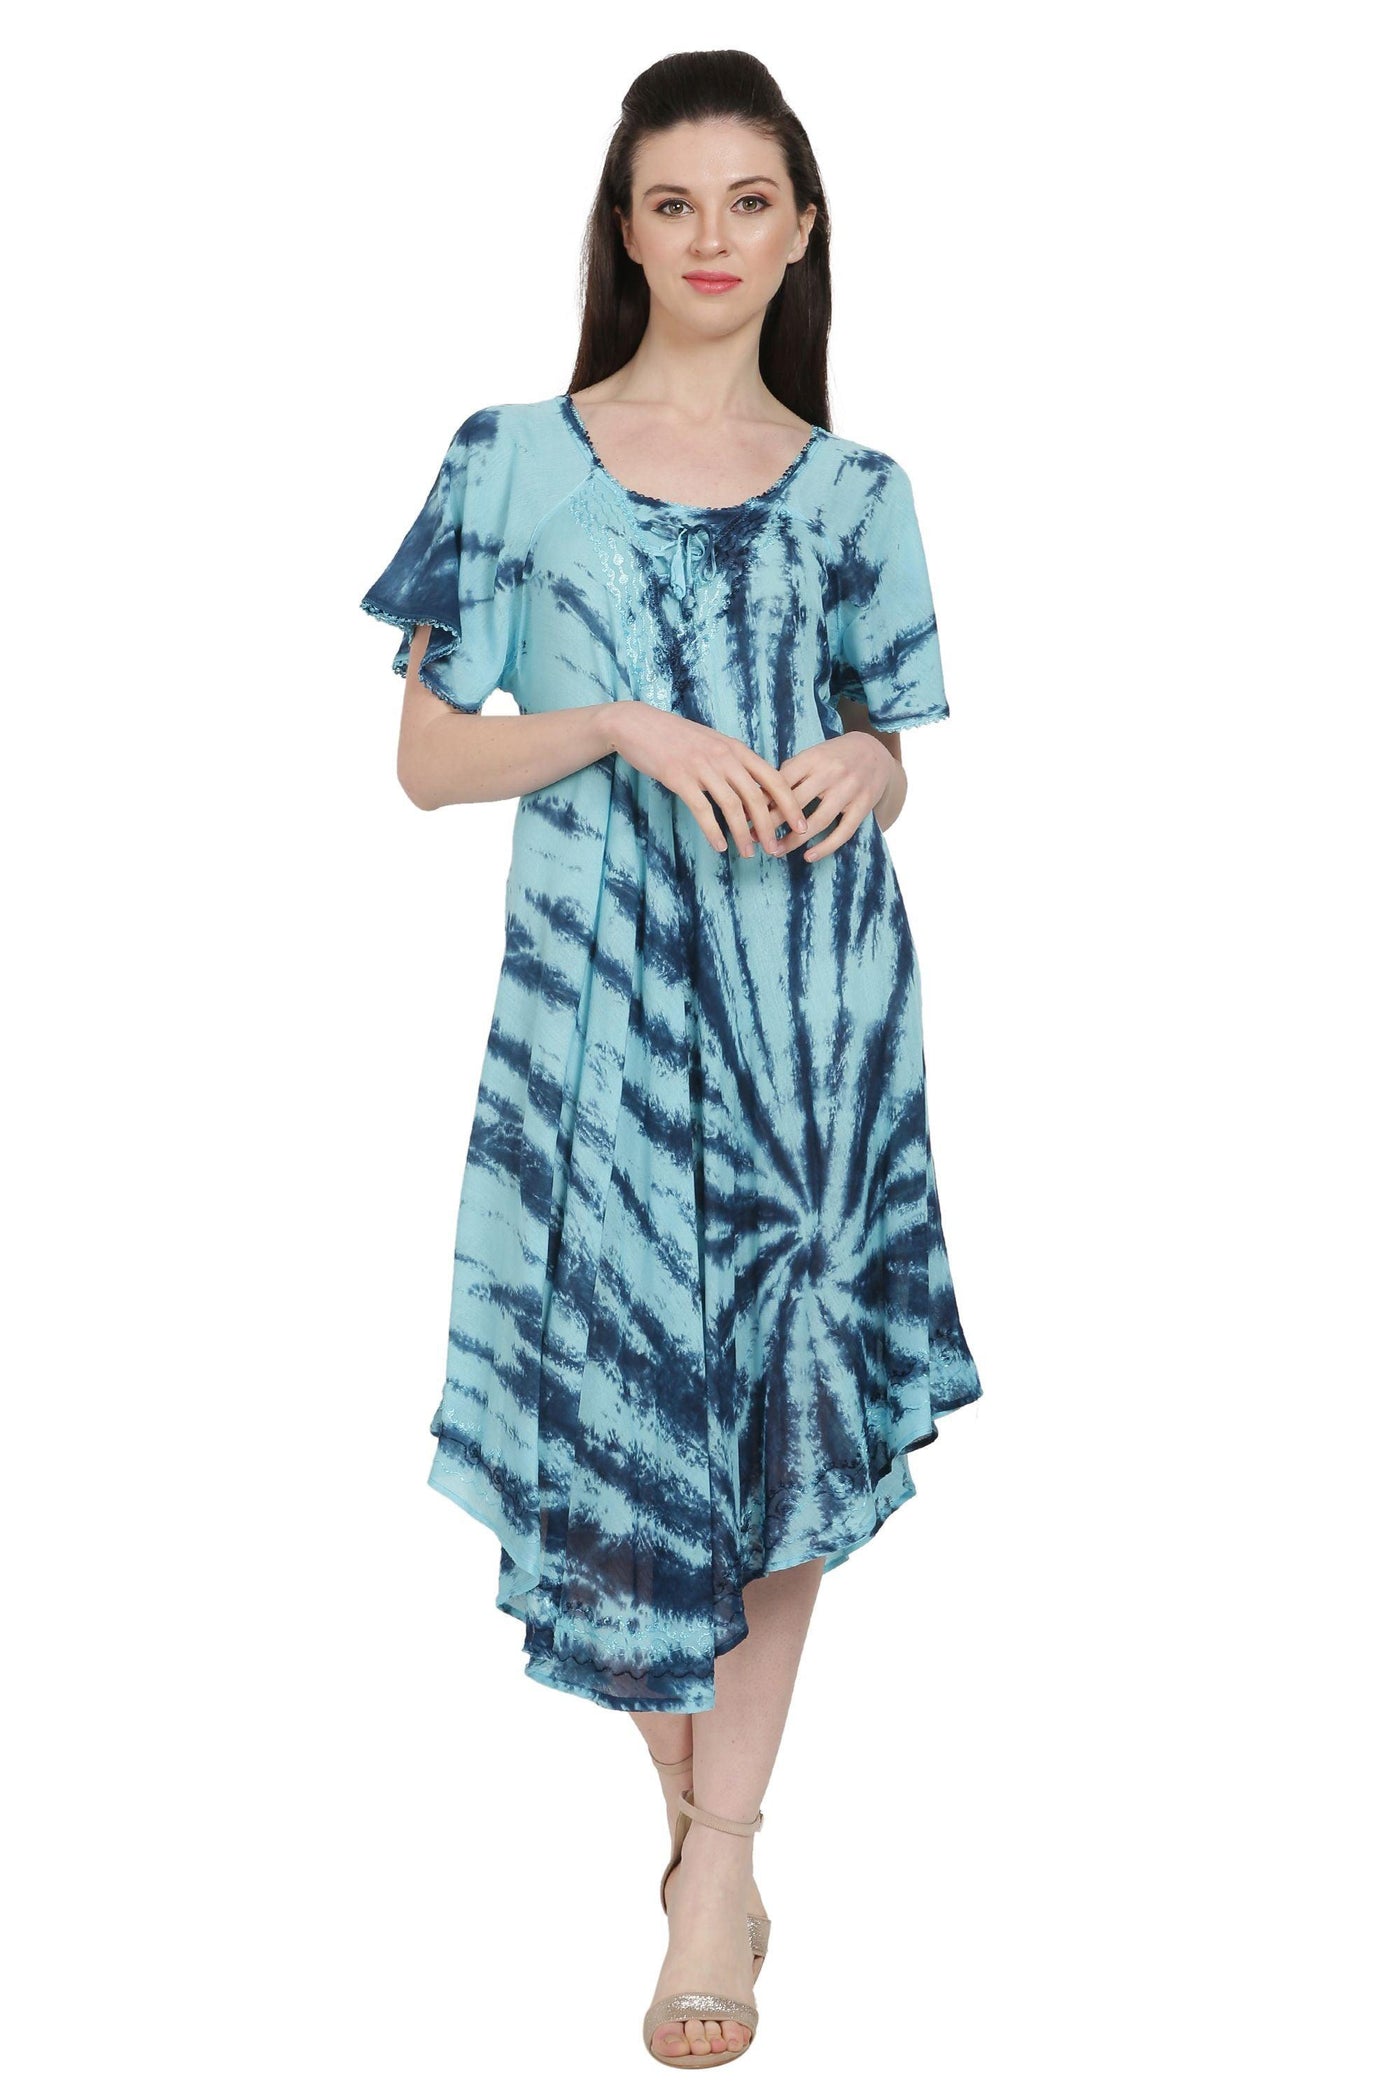 Waikiki Tie Dye Umbrella Dress w/ Sleeves UDS48-2403  - Advance Apparels Inc